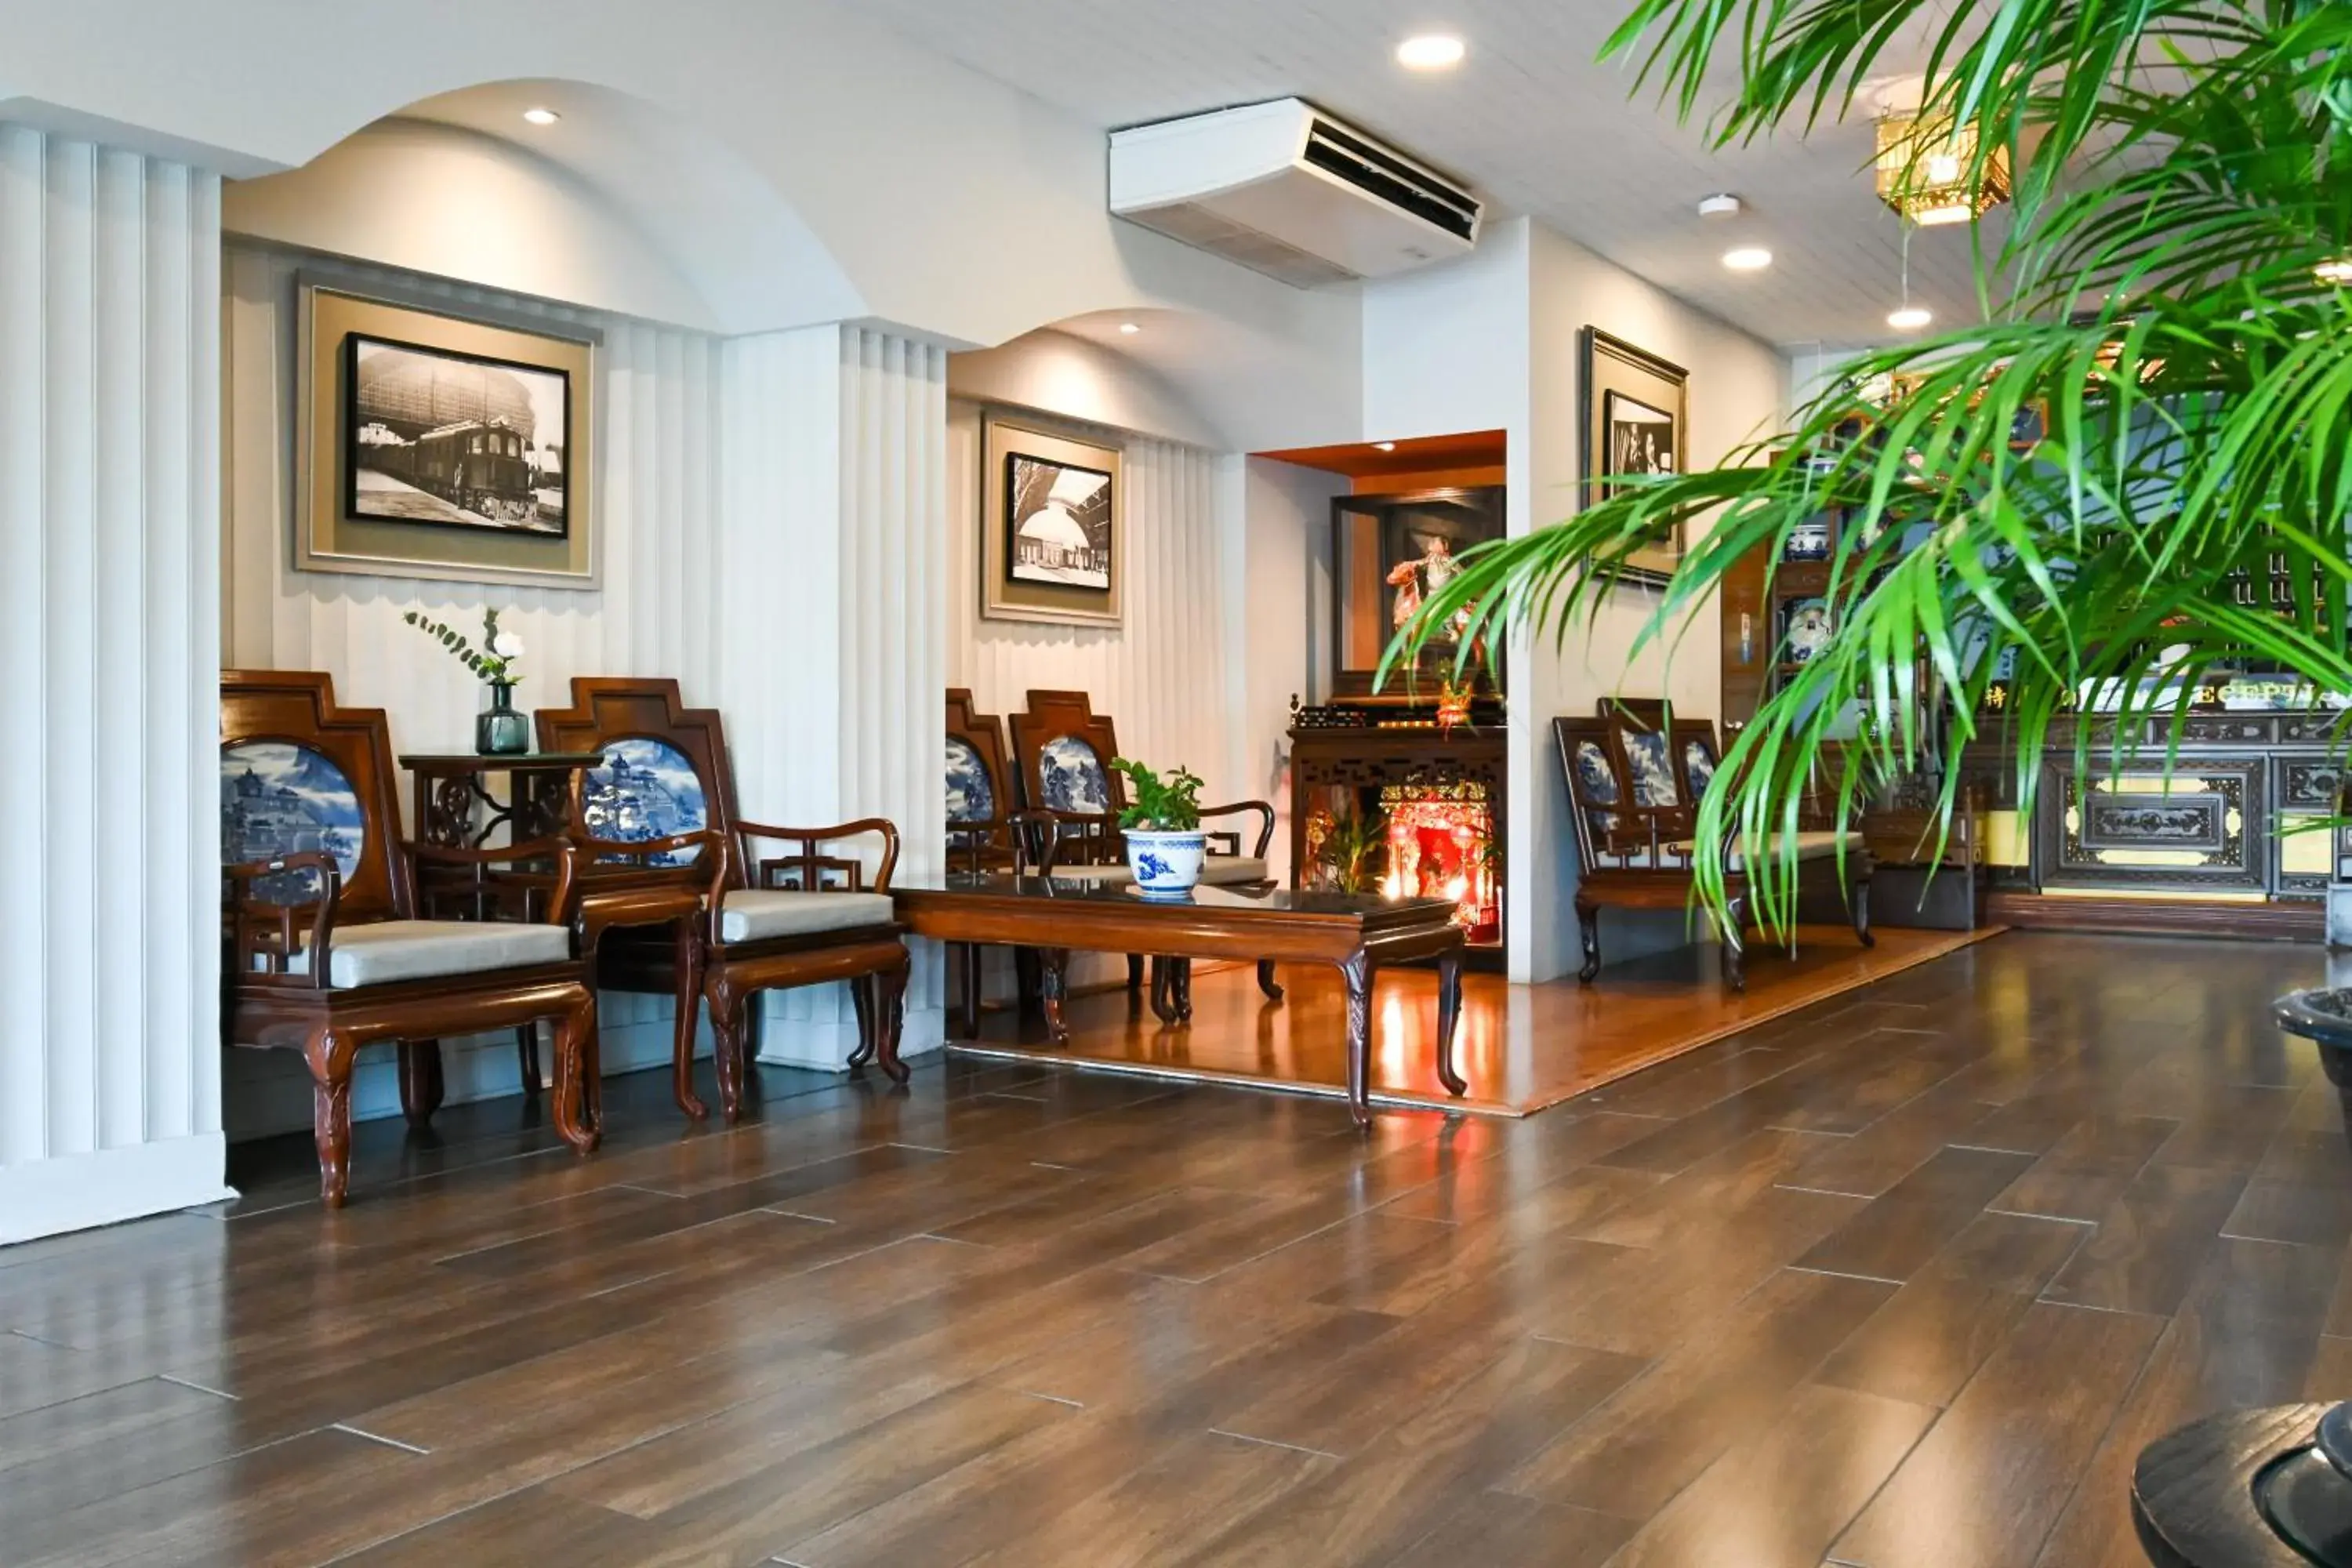 Lobby or reception in The Krungkasem Srikrung Hotel